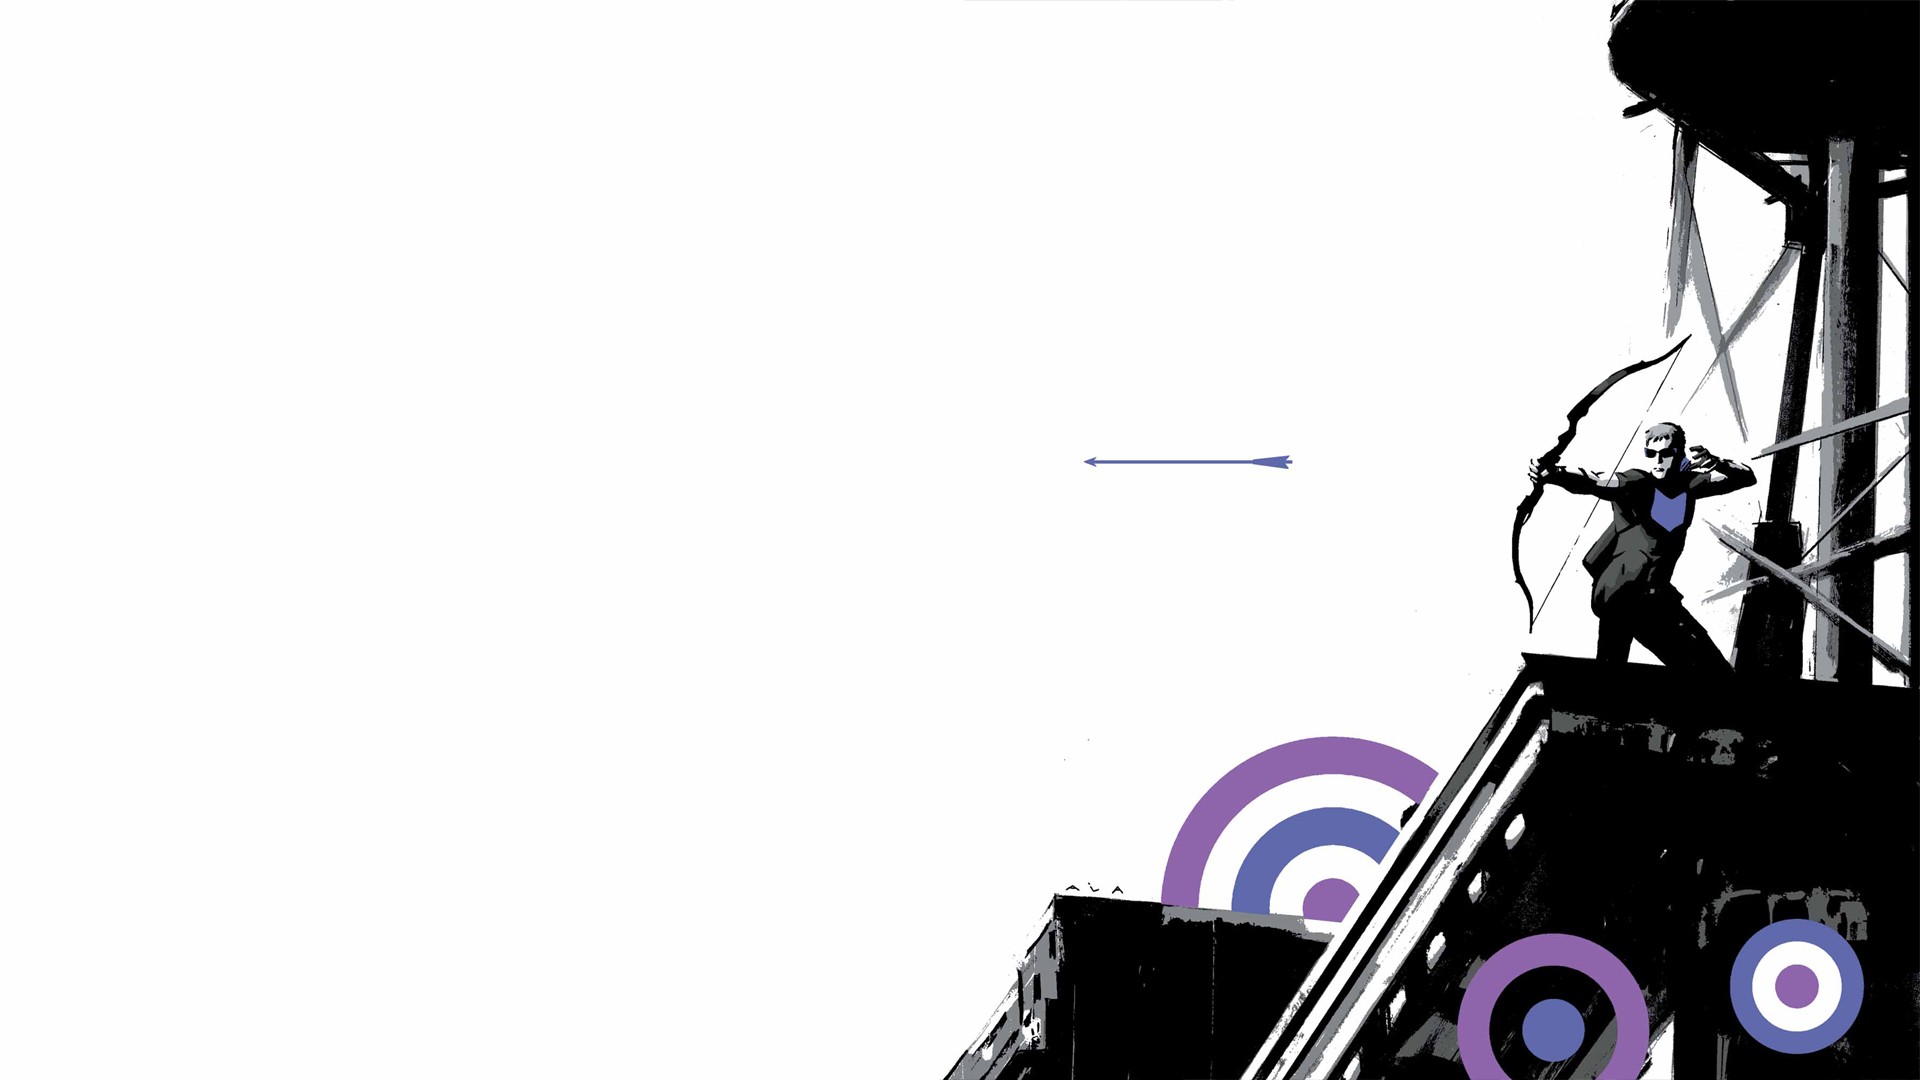 Hawkeye Puter Wallpaper Desktop Background Id